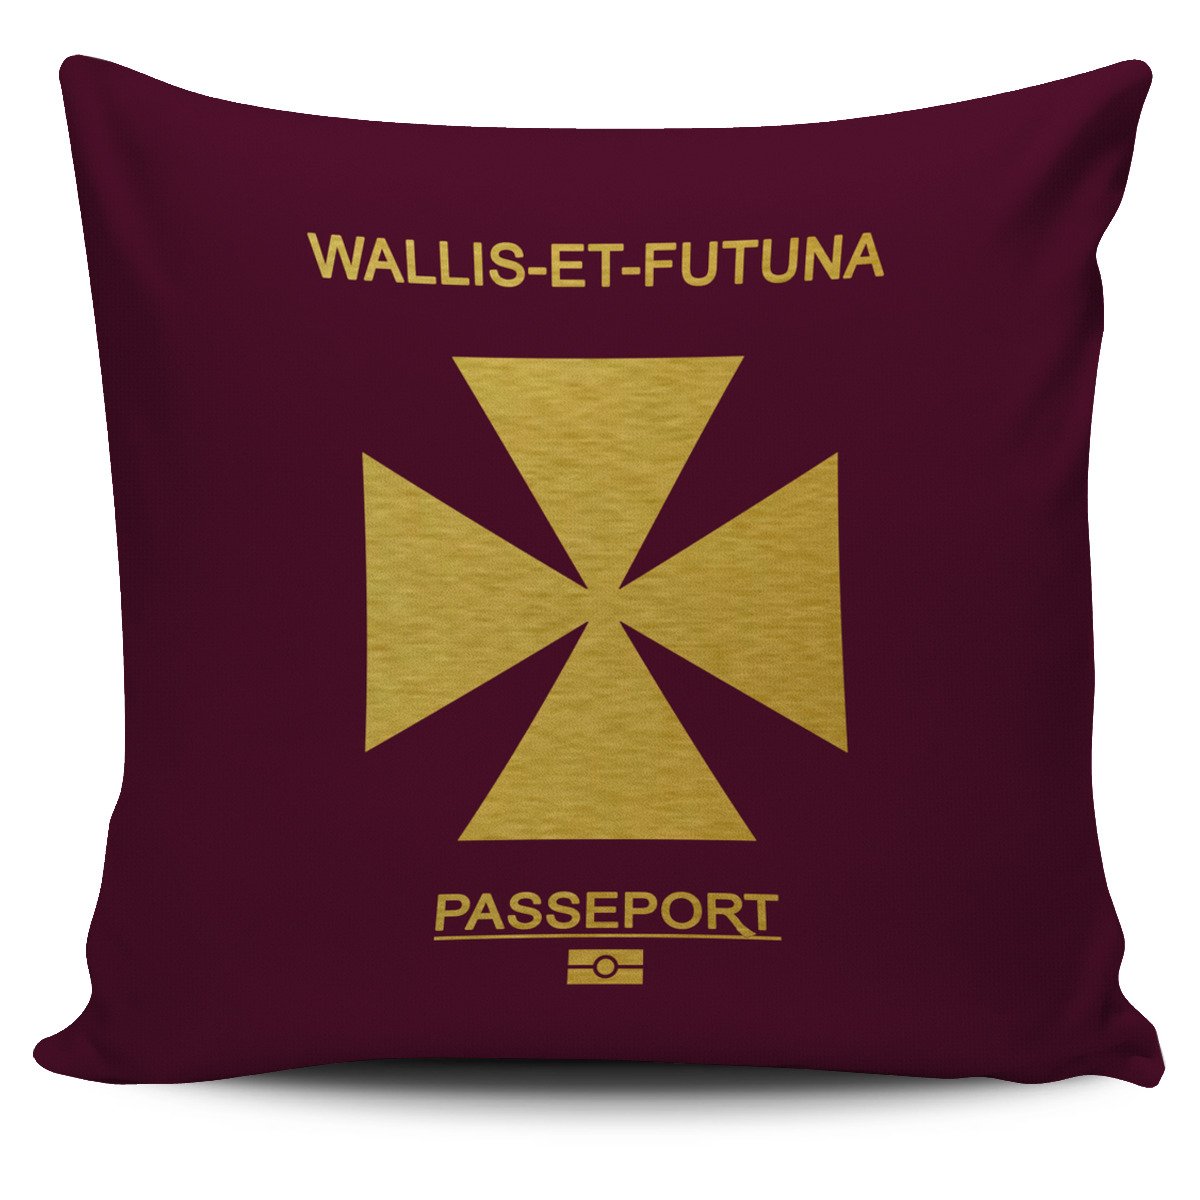 Wallis and Futuna Pillow Cover - Passport Version Wallis and Futuna One Size Red - Polynesian Pride